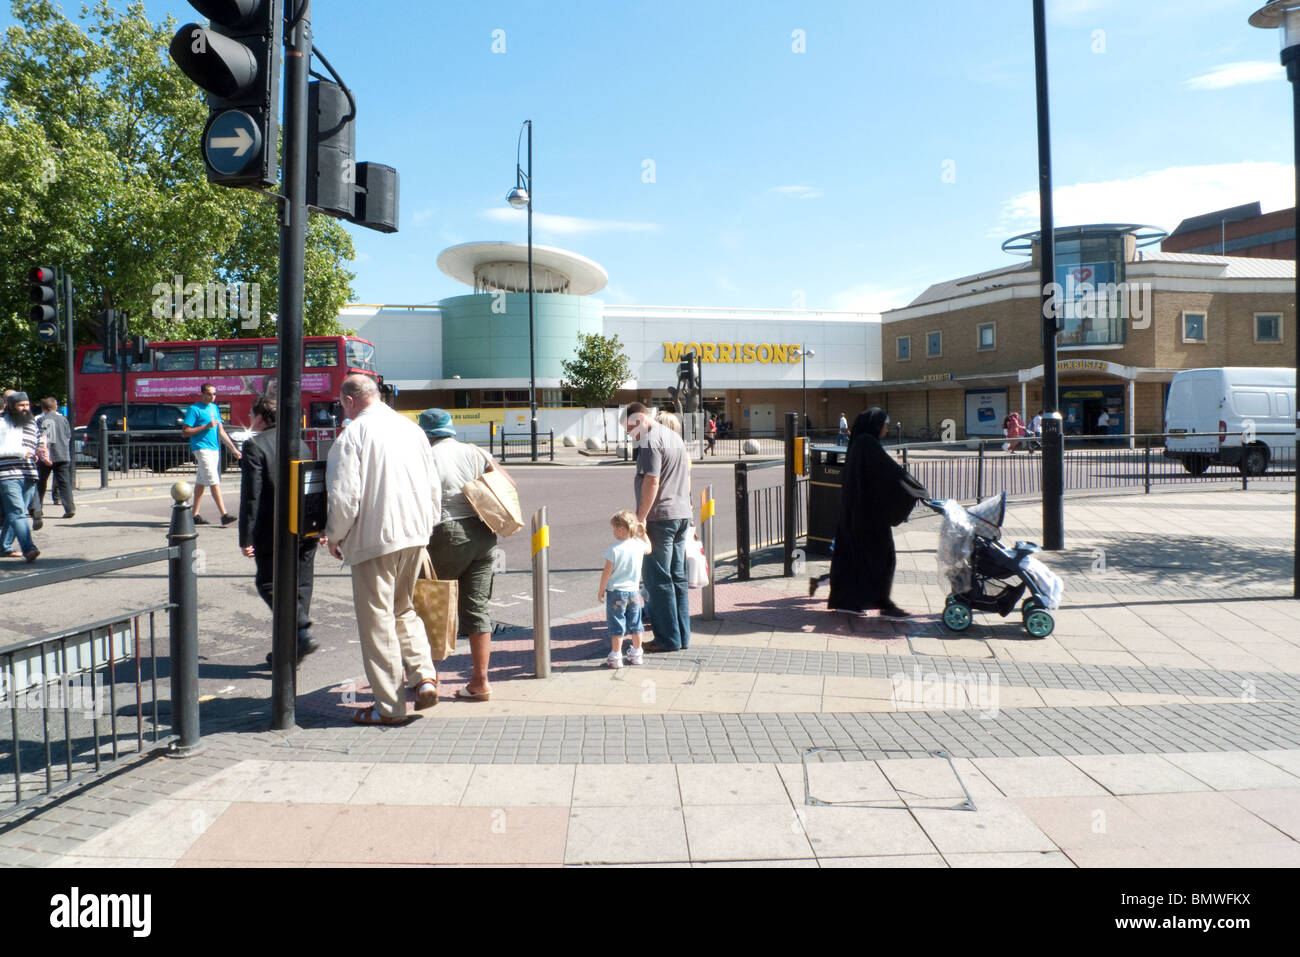 Pedestrians crossing street at traffic lights and Muslim woman with pram near Morrisons supermarket in Stratford East London England UK  KATHY DEWITT Stock Photo